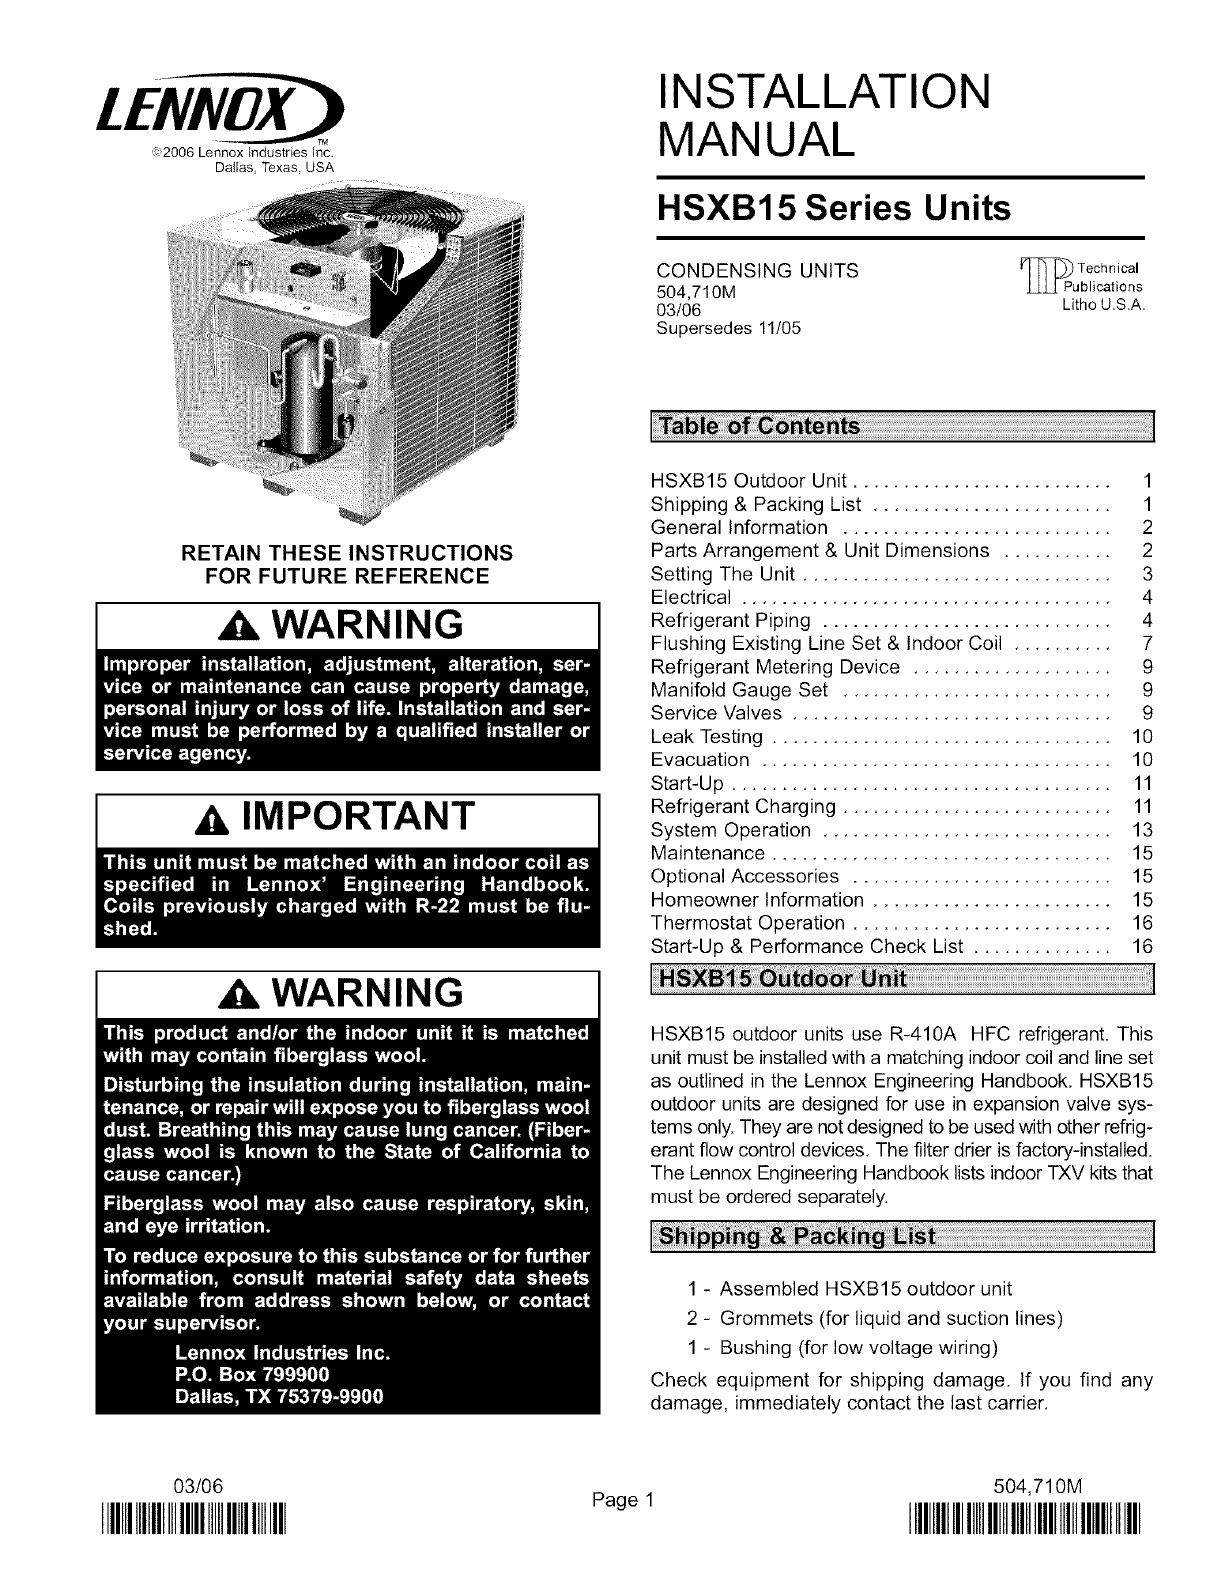 LENNOX Air Conditioner/heat Pump(outside Unit) Manual L0805502